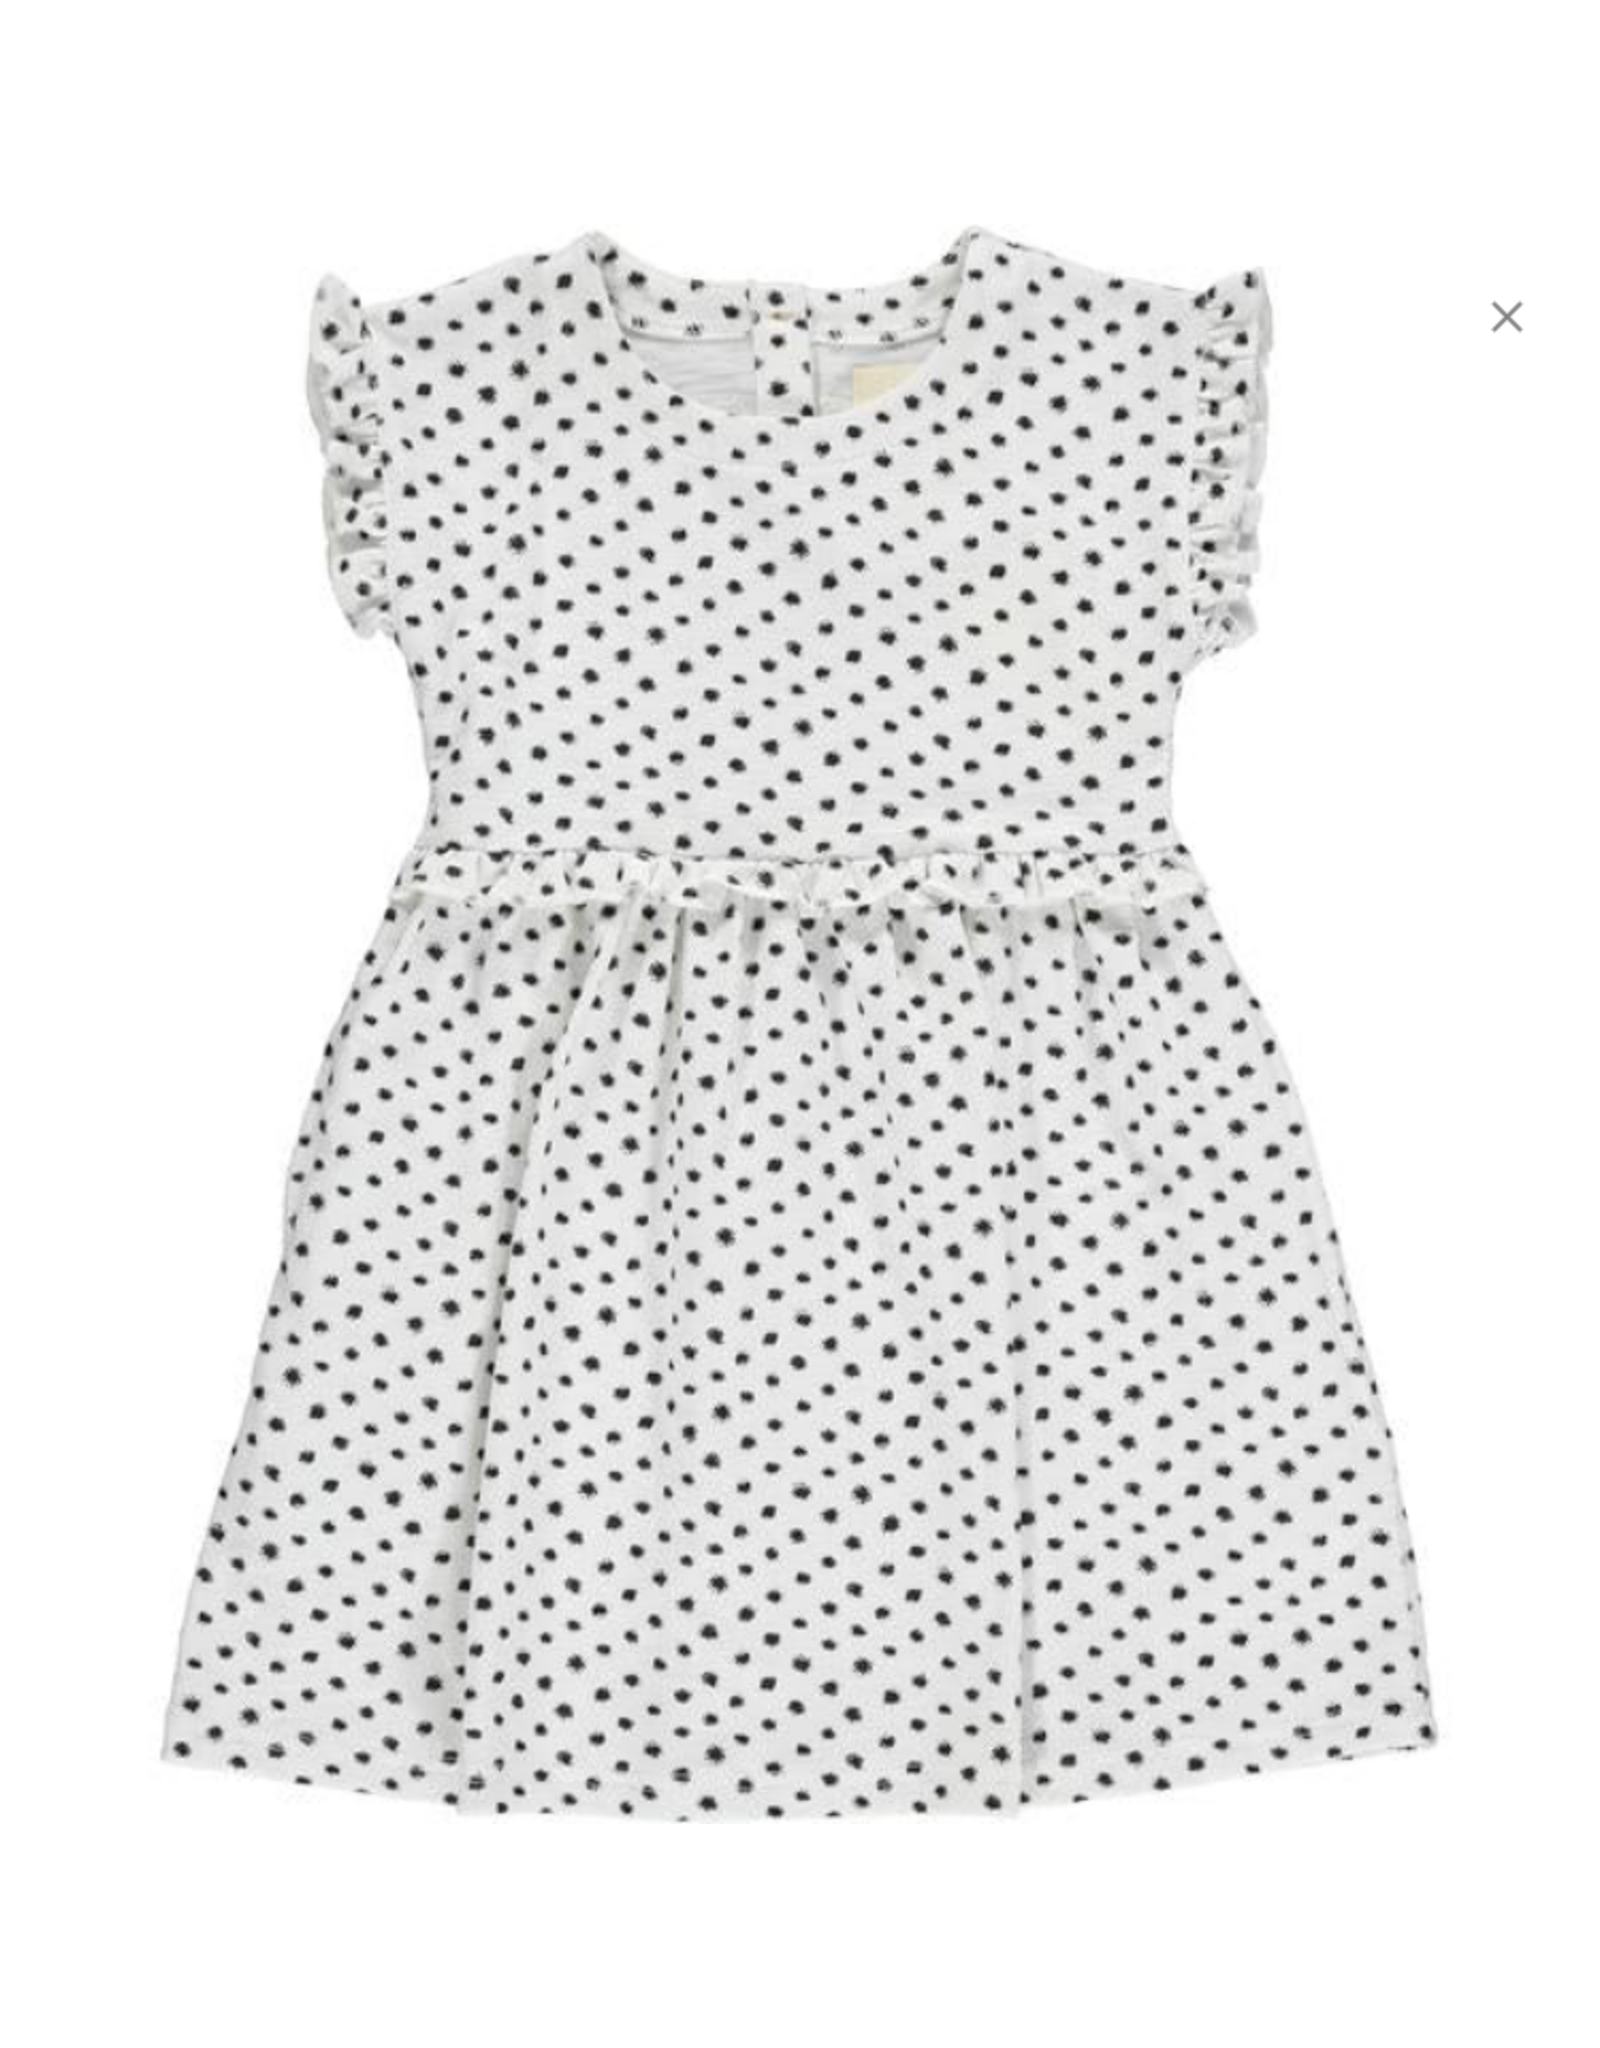 vignette Gemma Dress-White w/Black Dot